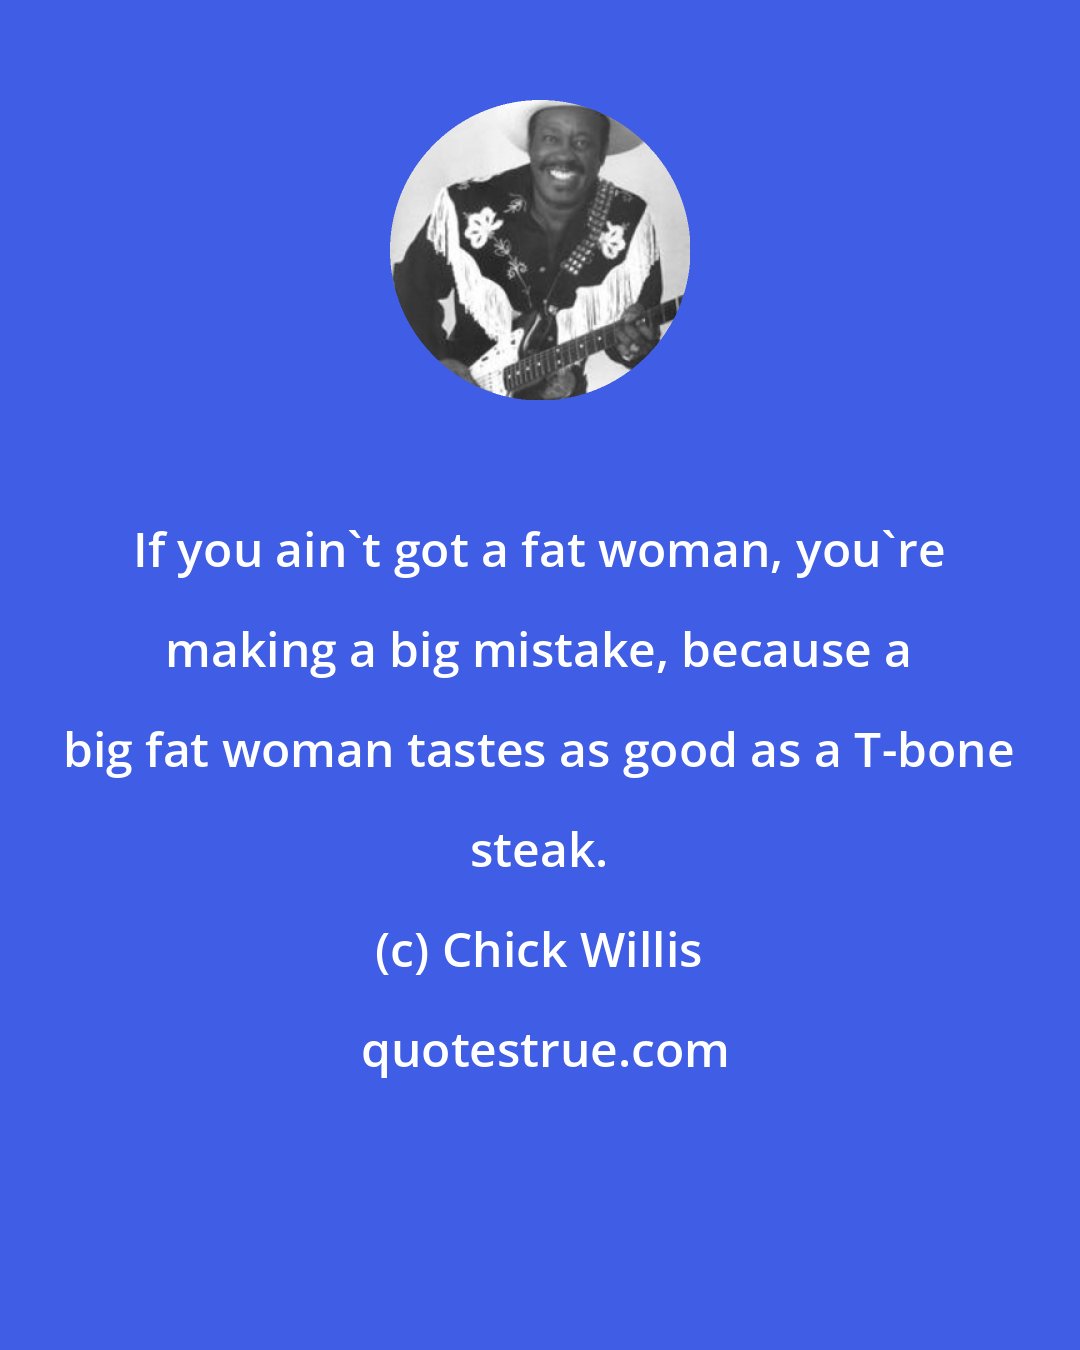 Chick Willis: If you ain't got a fat woman, you're making a big mistake, because a big fat woman tastes as good as a T-bone steak.